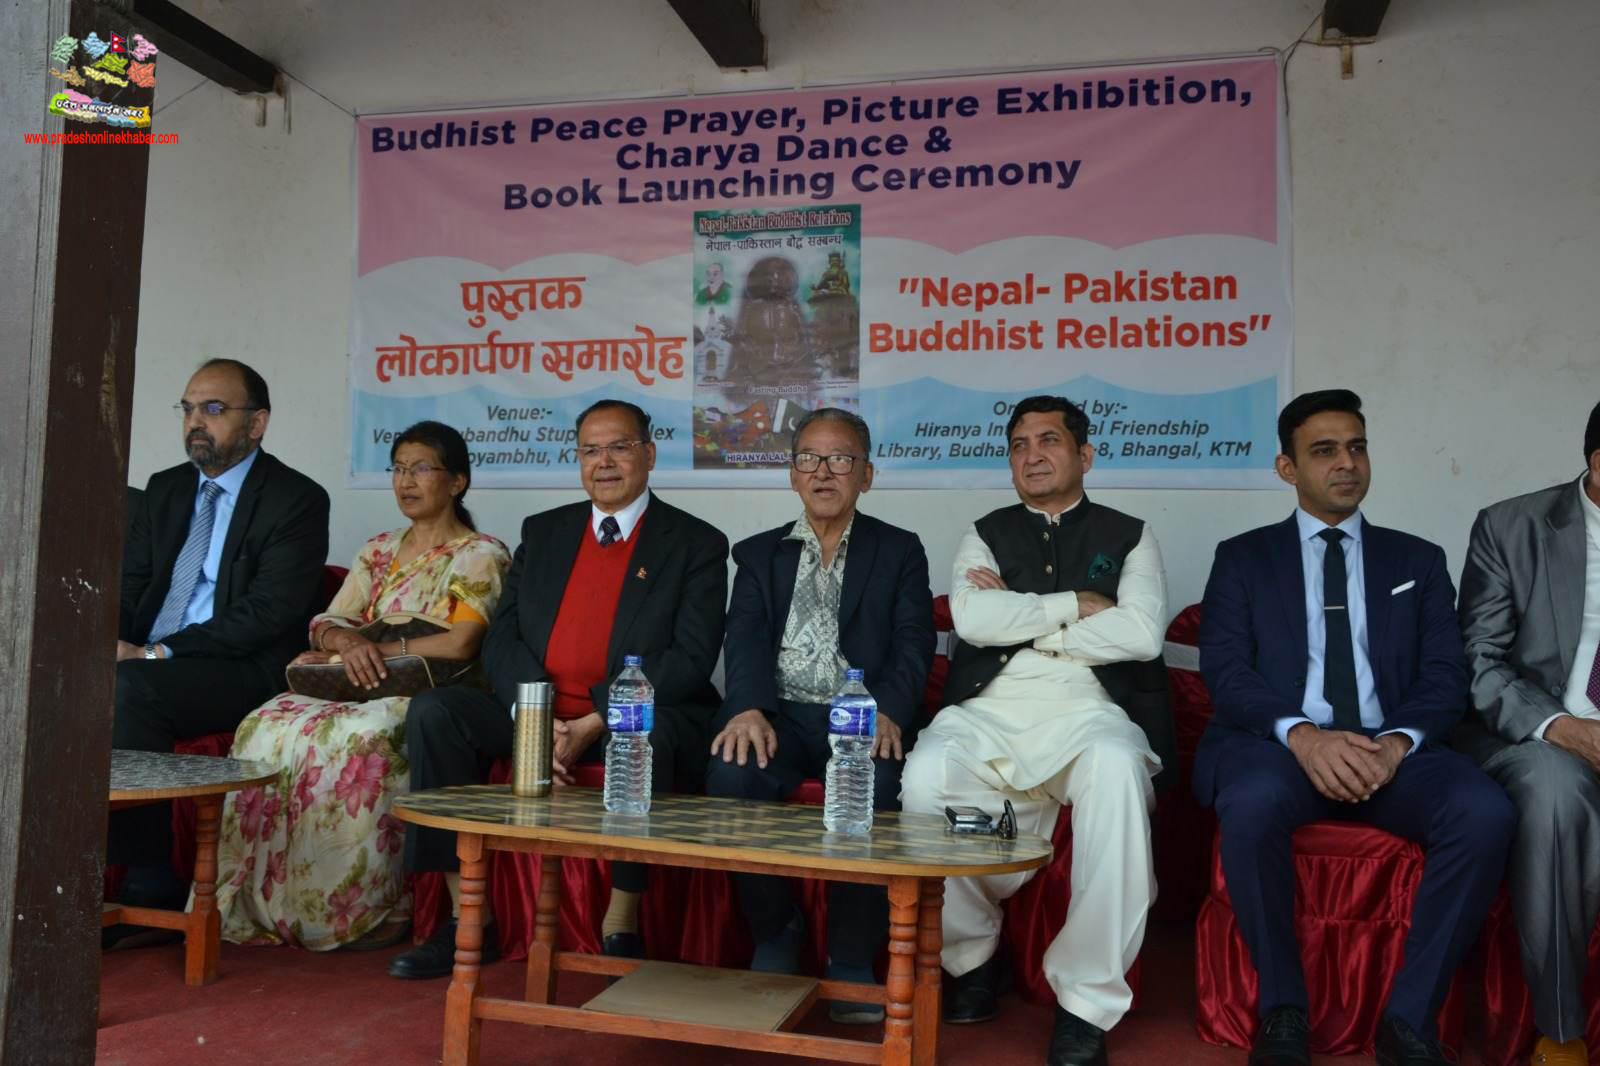 Launching of Book “Nepal-Pakistan Buddhist Relations” - PRADESH ONLINE KHABAR